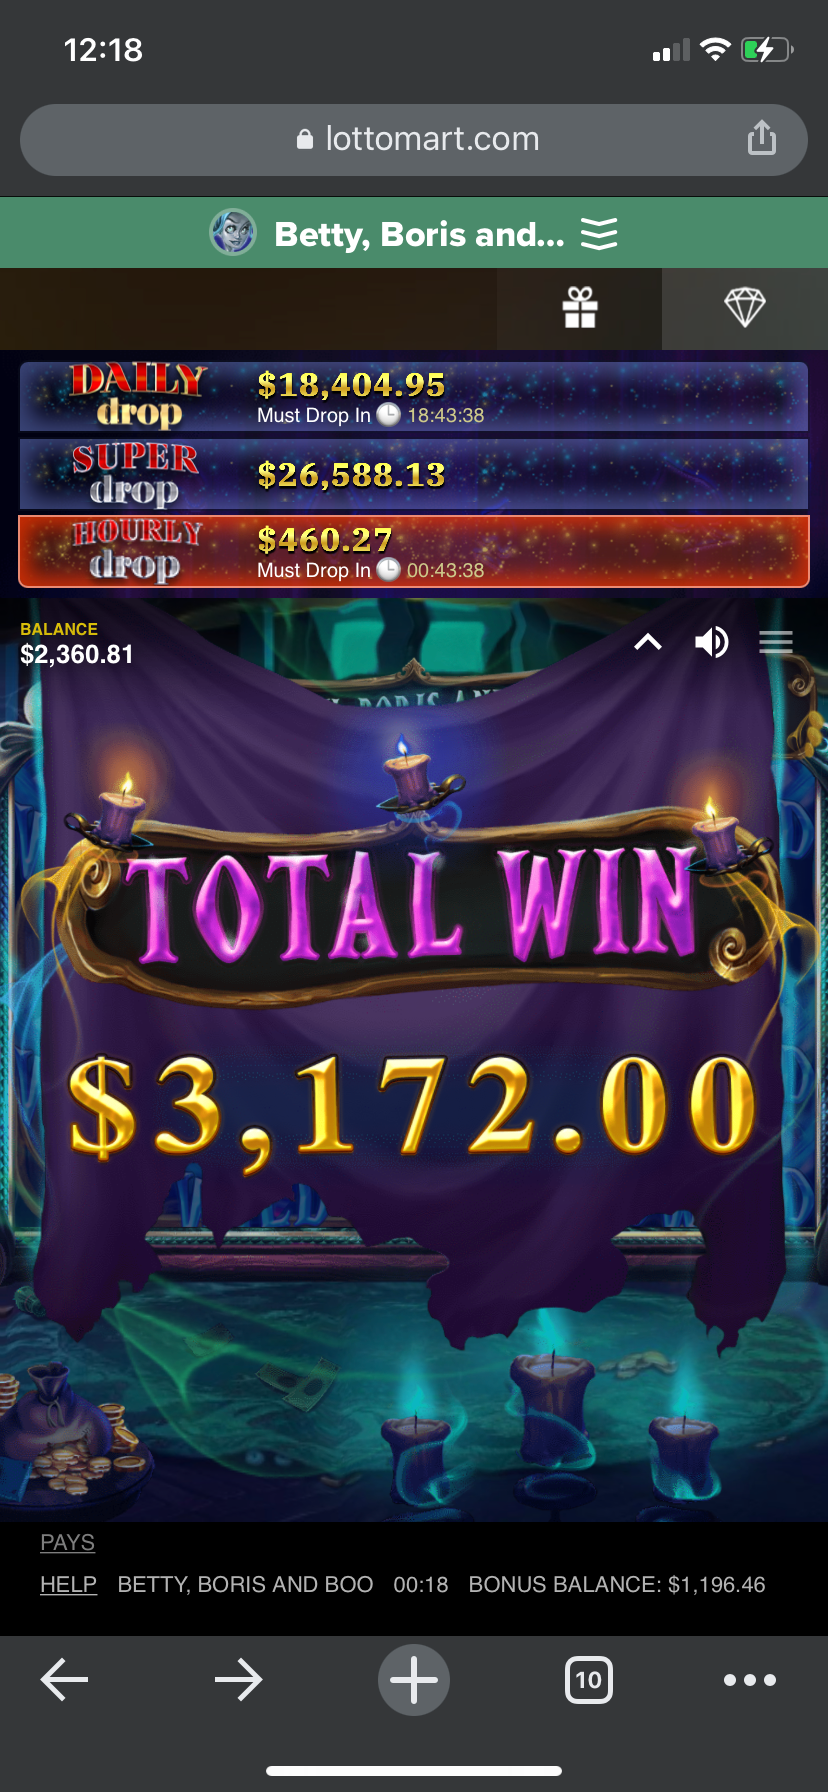 Lottomart Casino undefined player big win